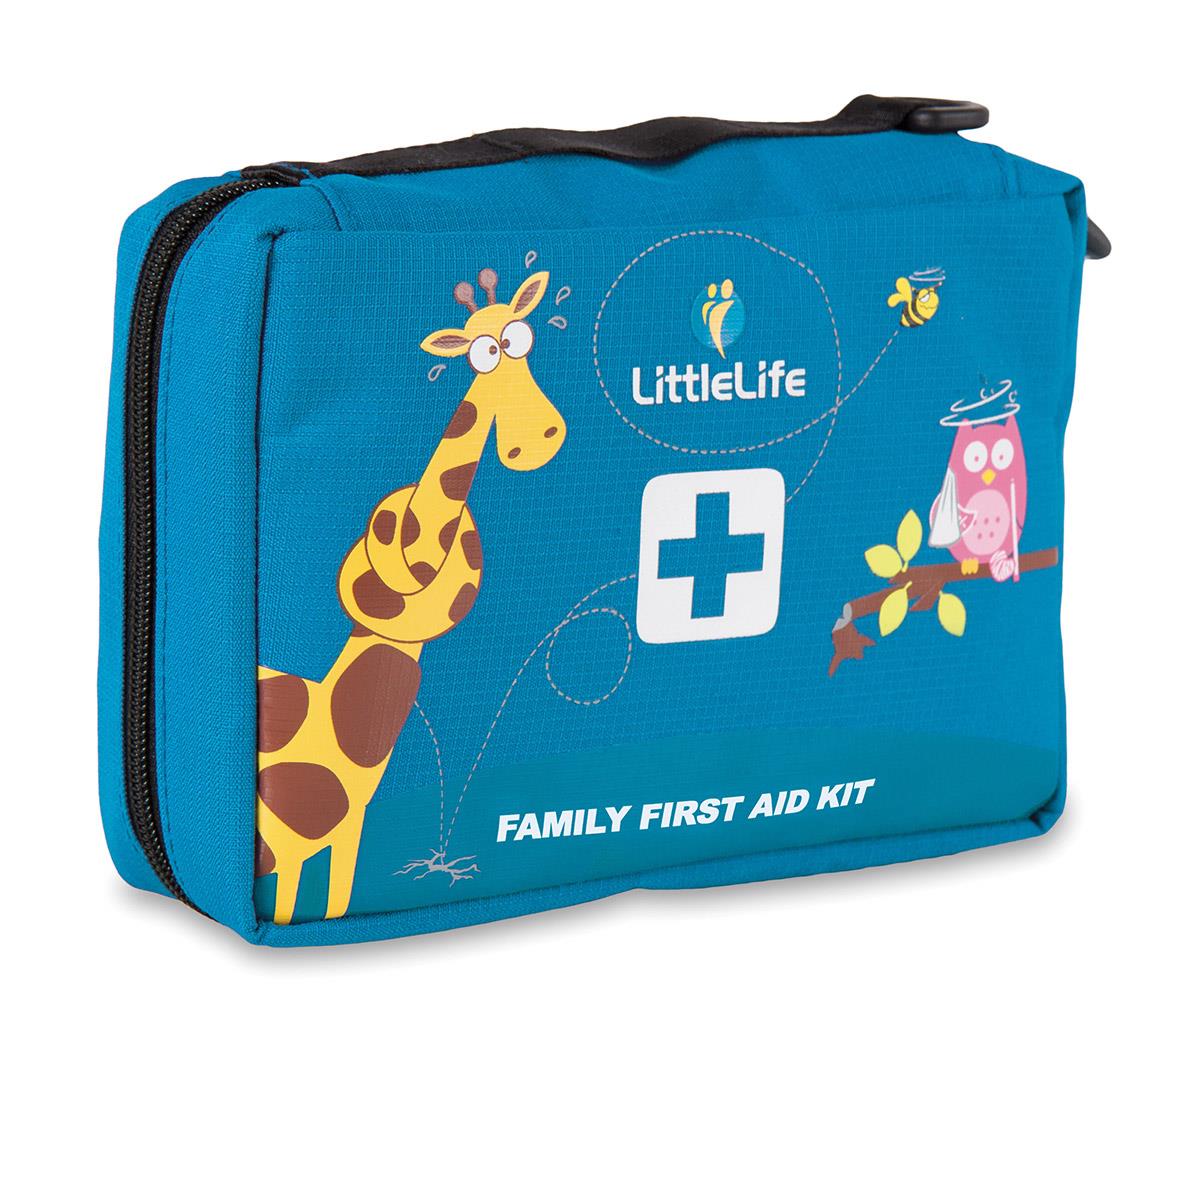 Apteczka LittleLife Family First Aid Kit